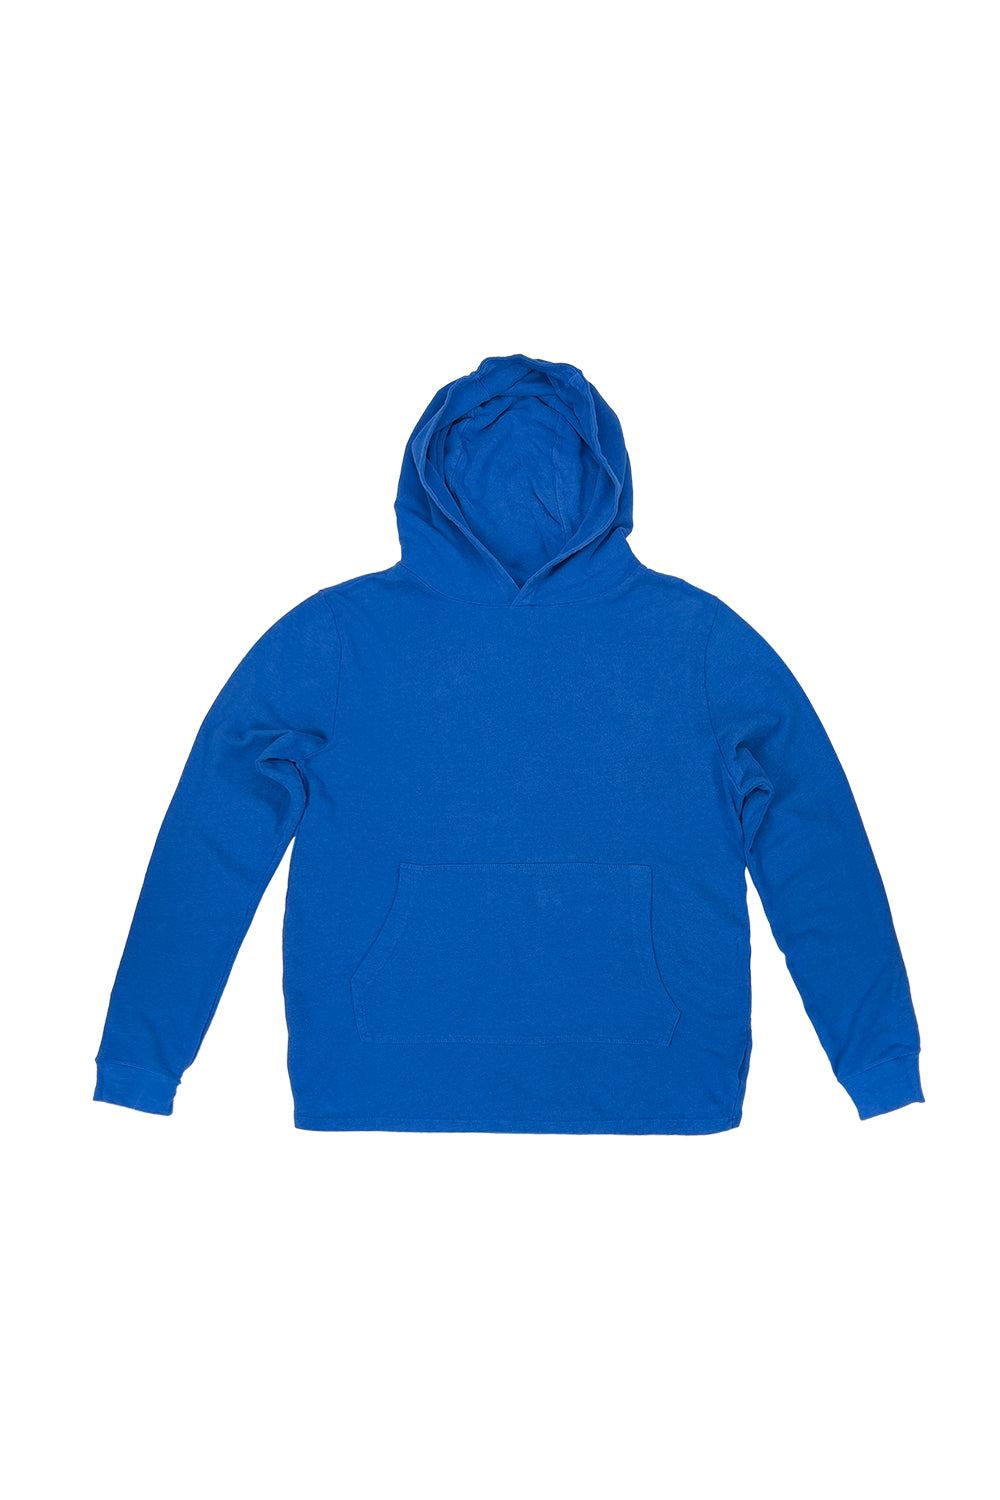 Santa Cruz Hooded Long Sleeve | Jungmaven Hemp Clothing & Accessories / Color: Galaxy Blue